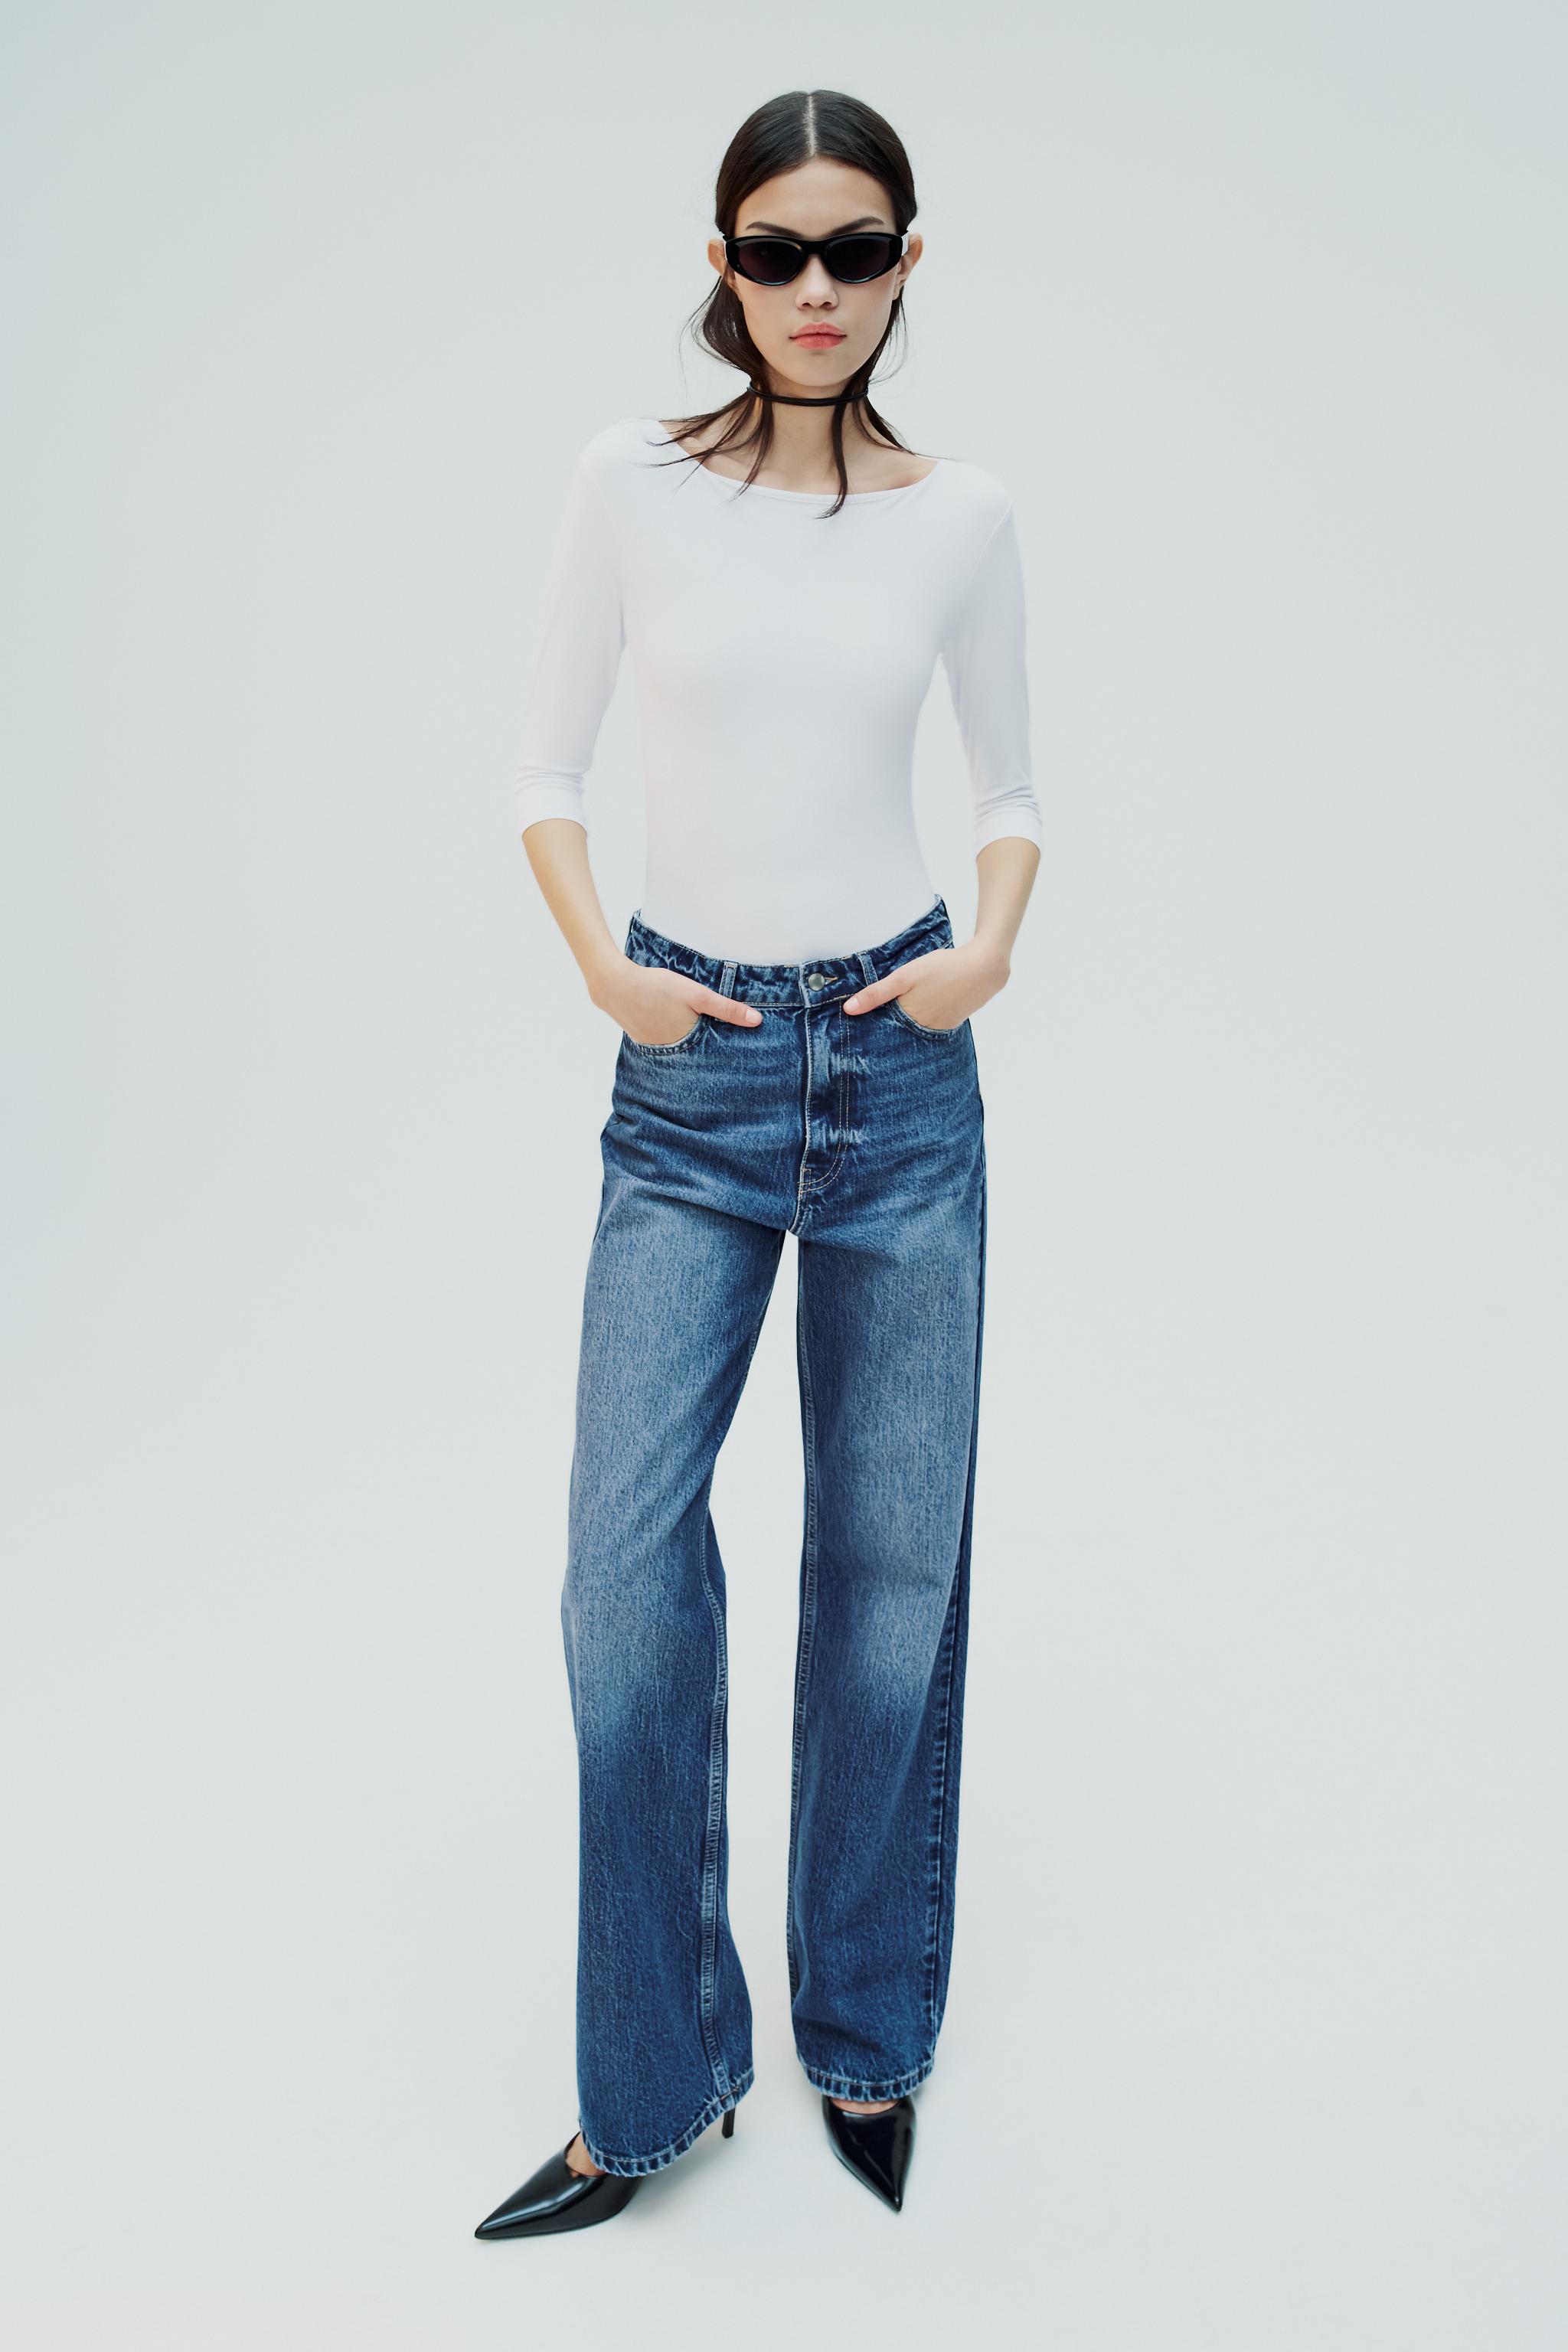 Zara Women High-waist trousers with belt 4387/030/800 (Small): Buy